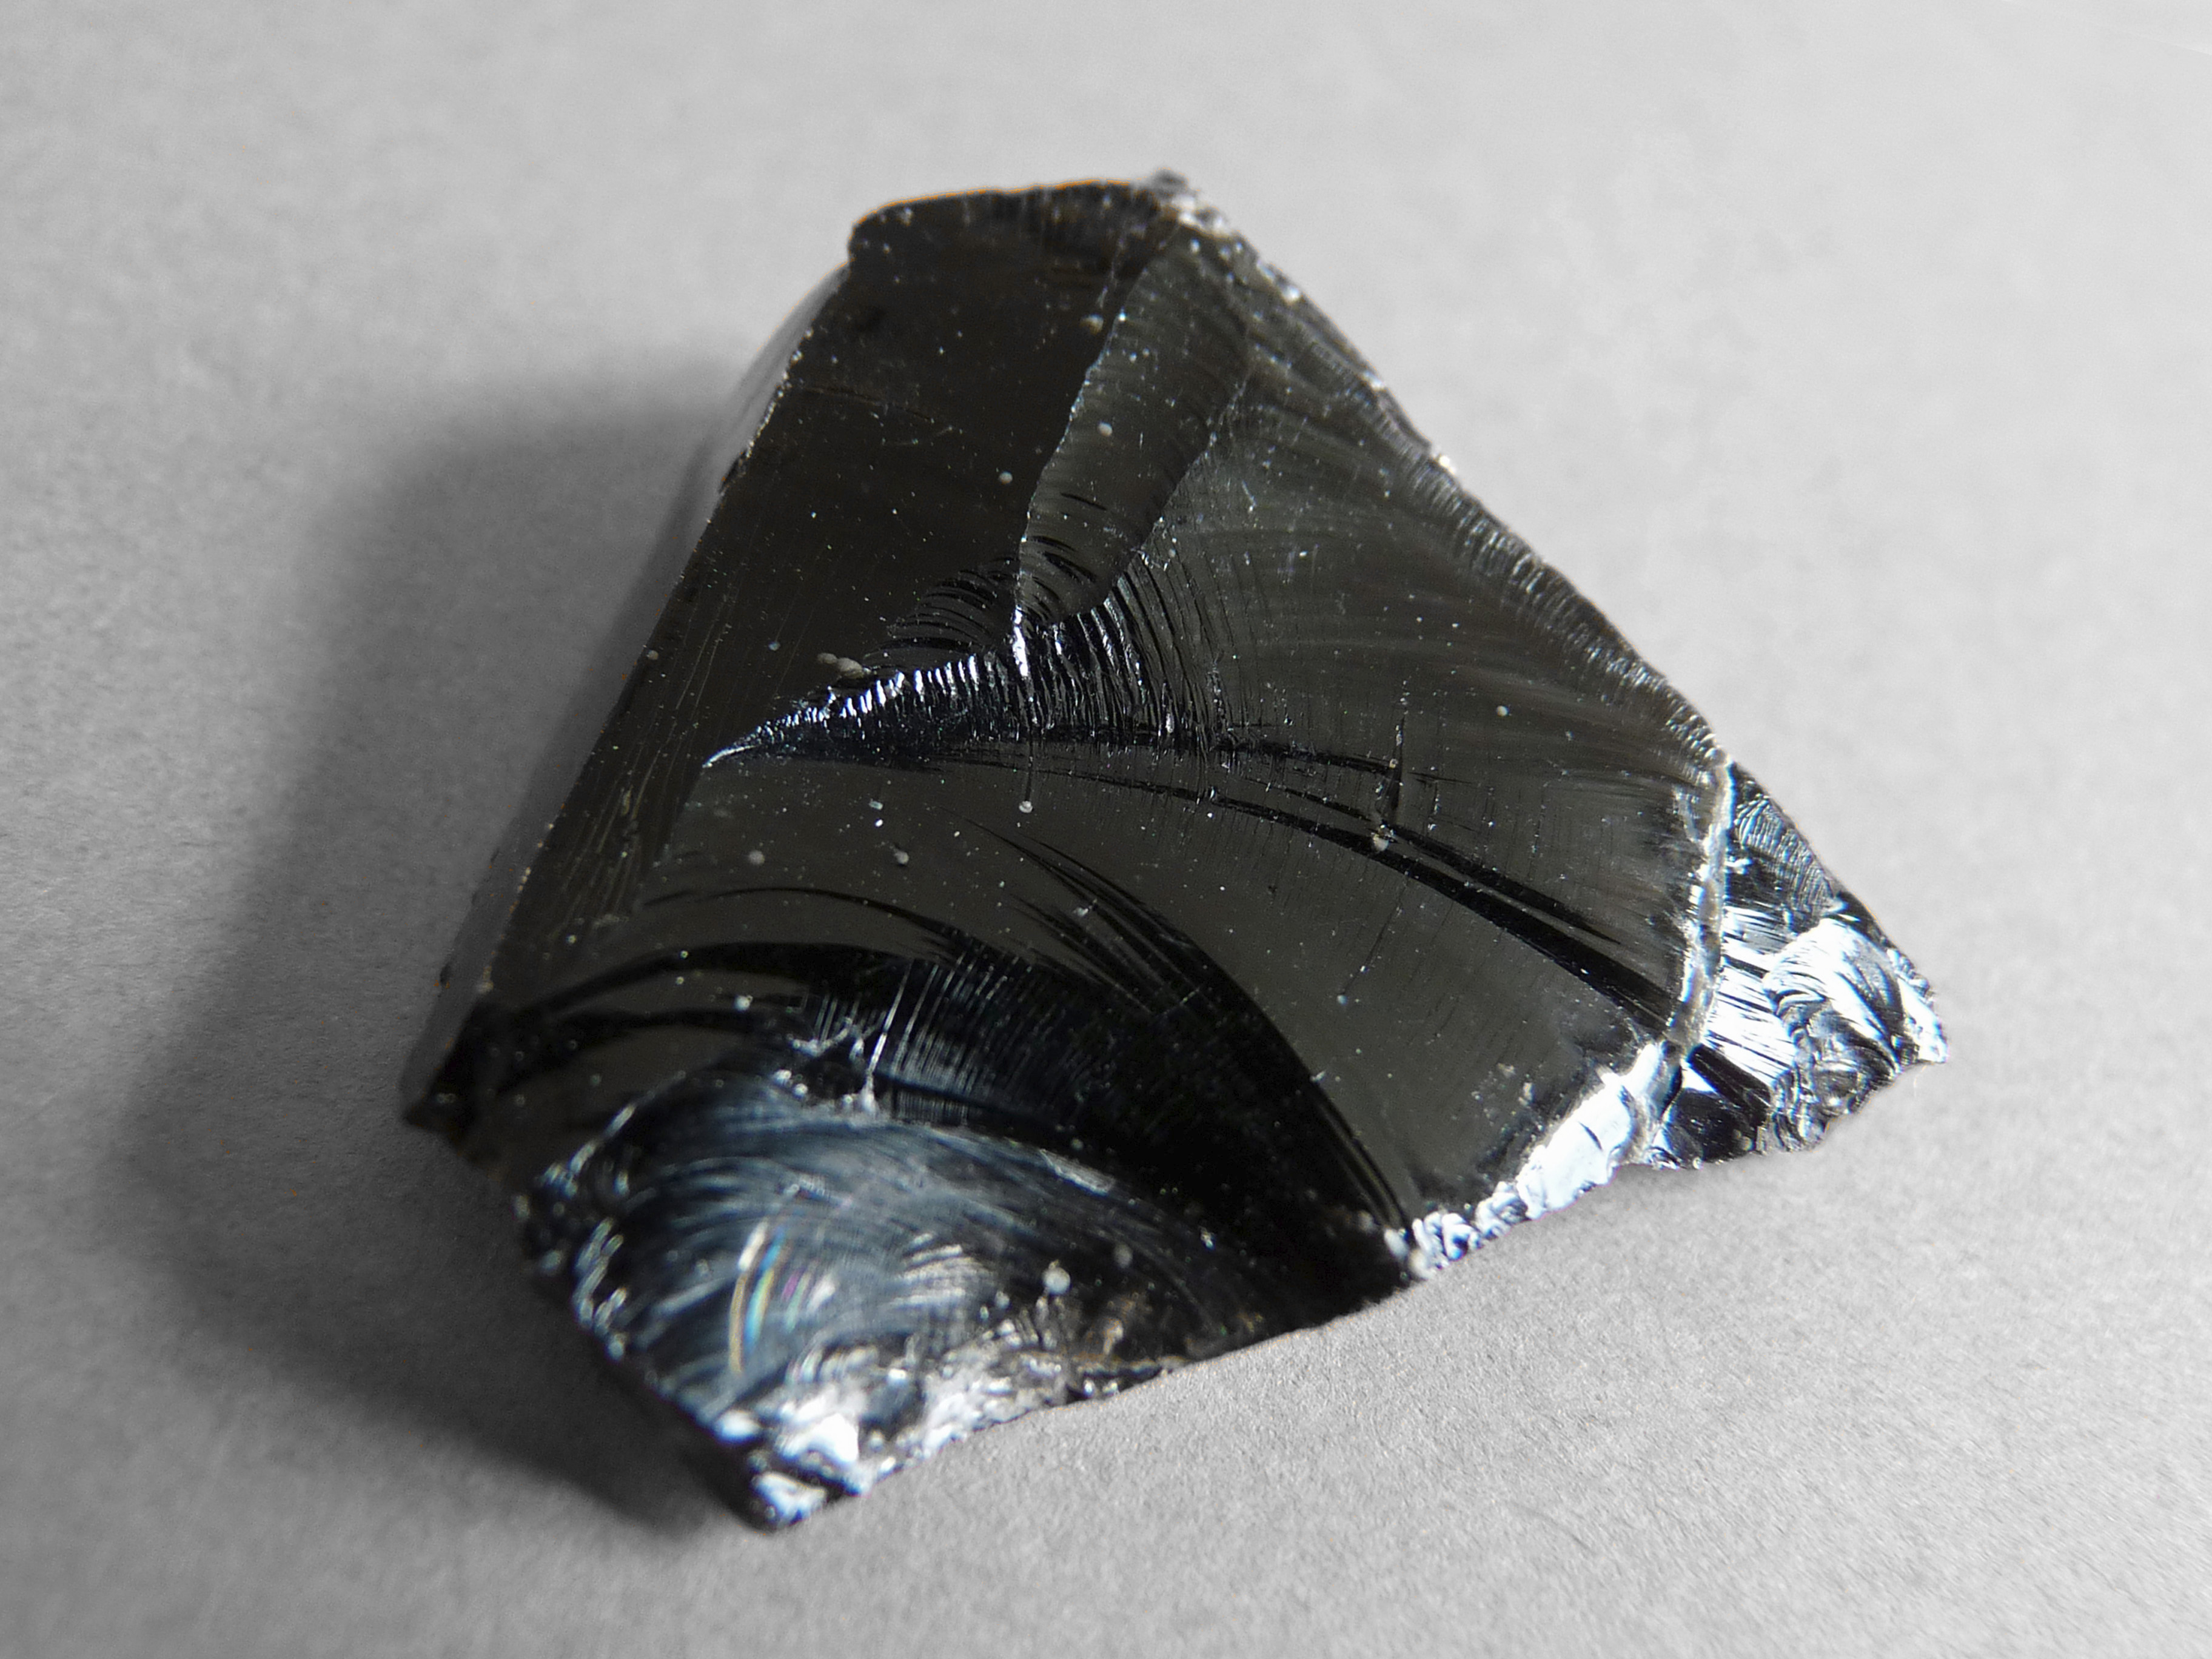 Black obsidian stone